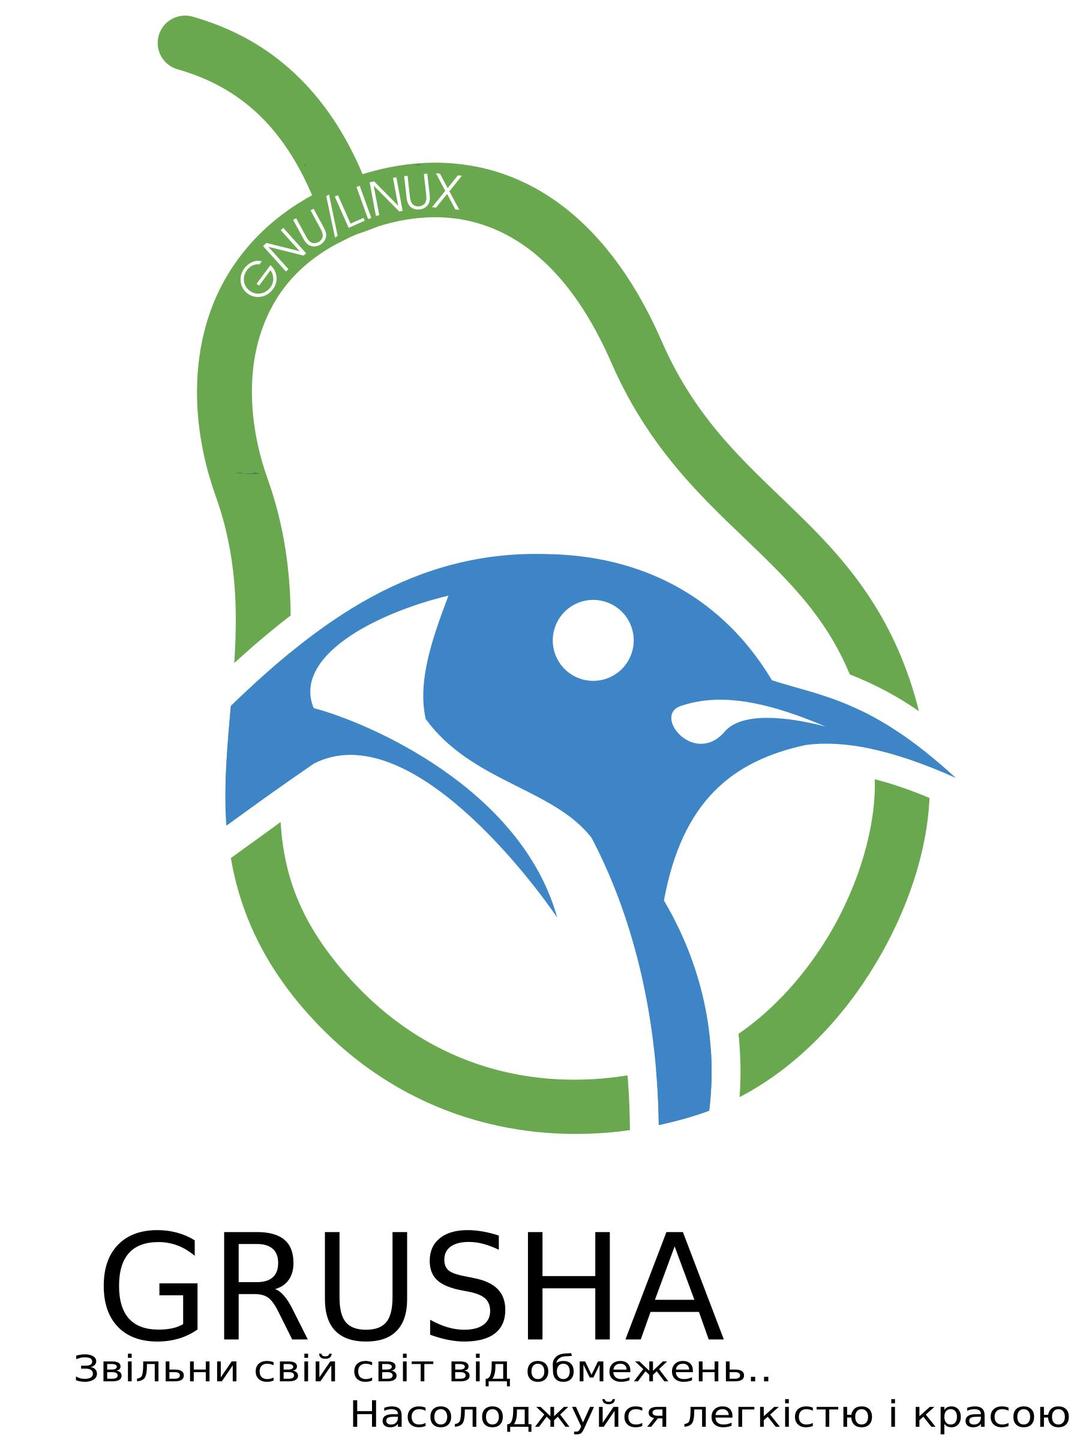 Grusha GNU/Linux logo png transparent